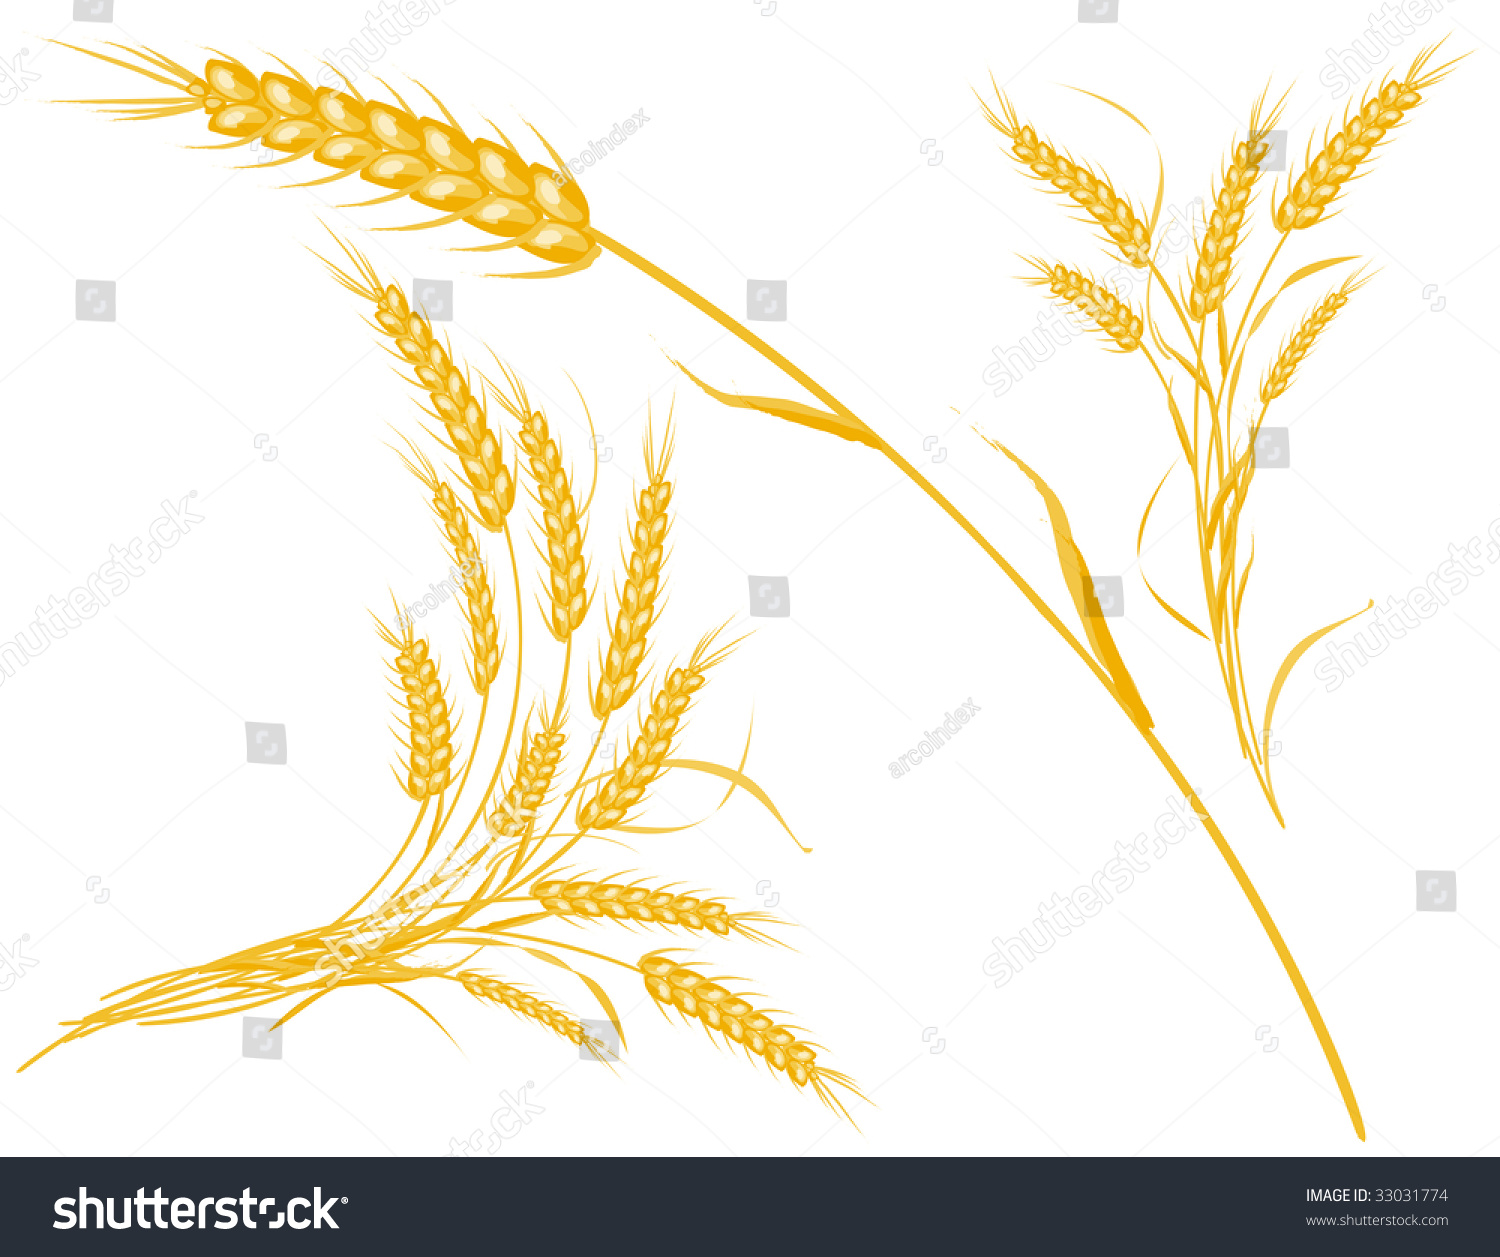 Wheat Stock Vector Illustration 33031774 : Shutterstock